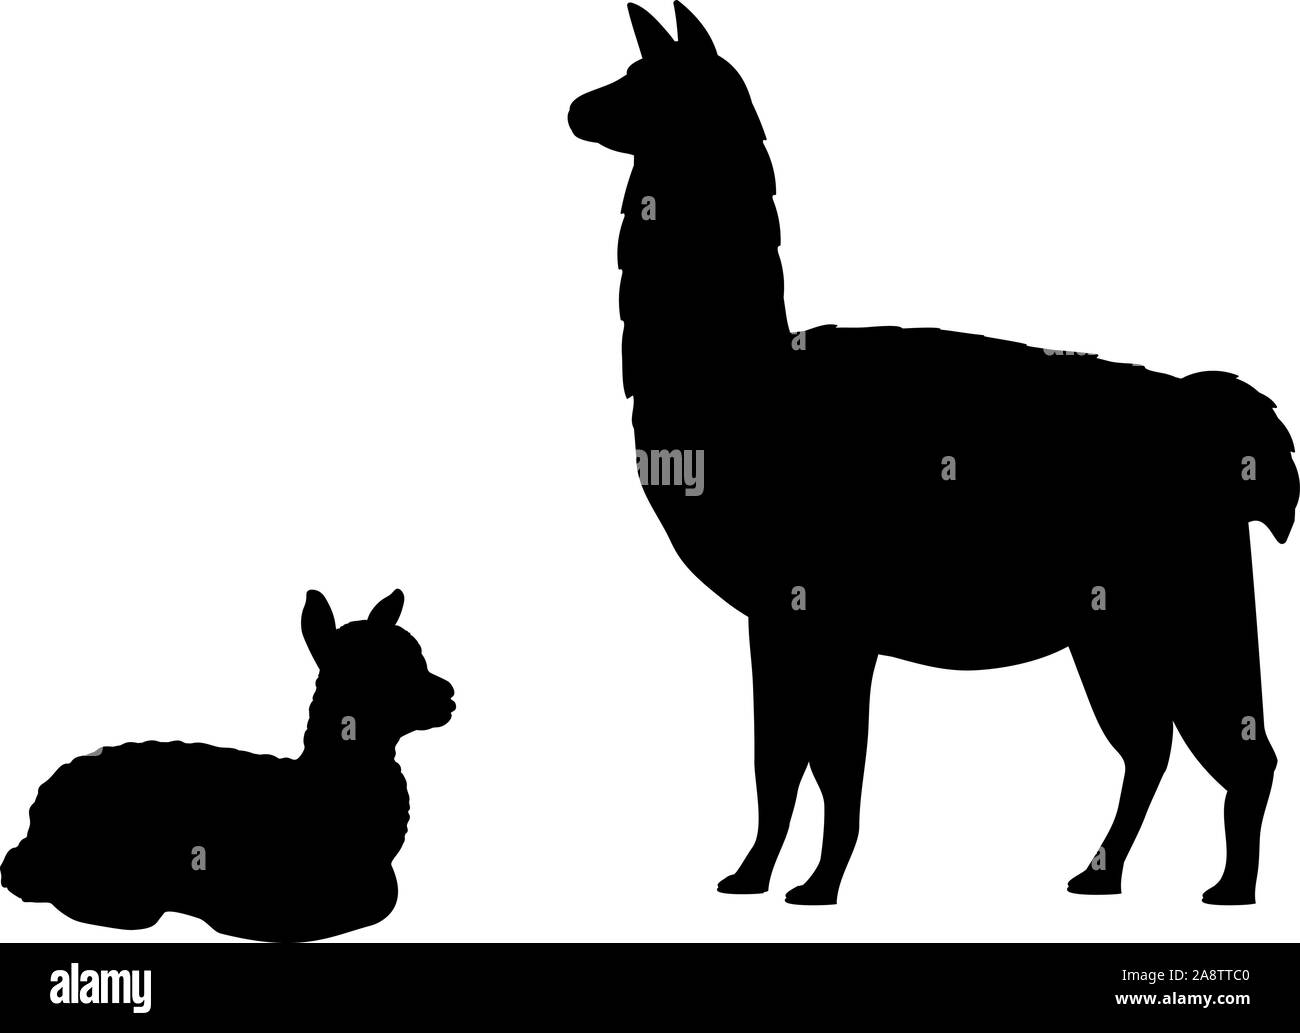 Silhouette von Lama Alpaka und jungen kleinen Lama Alpaka. Vektor Illustrator Stock Vektor